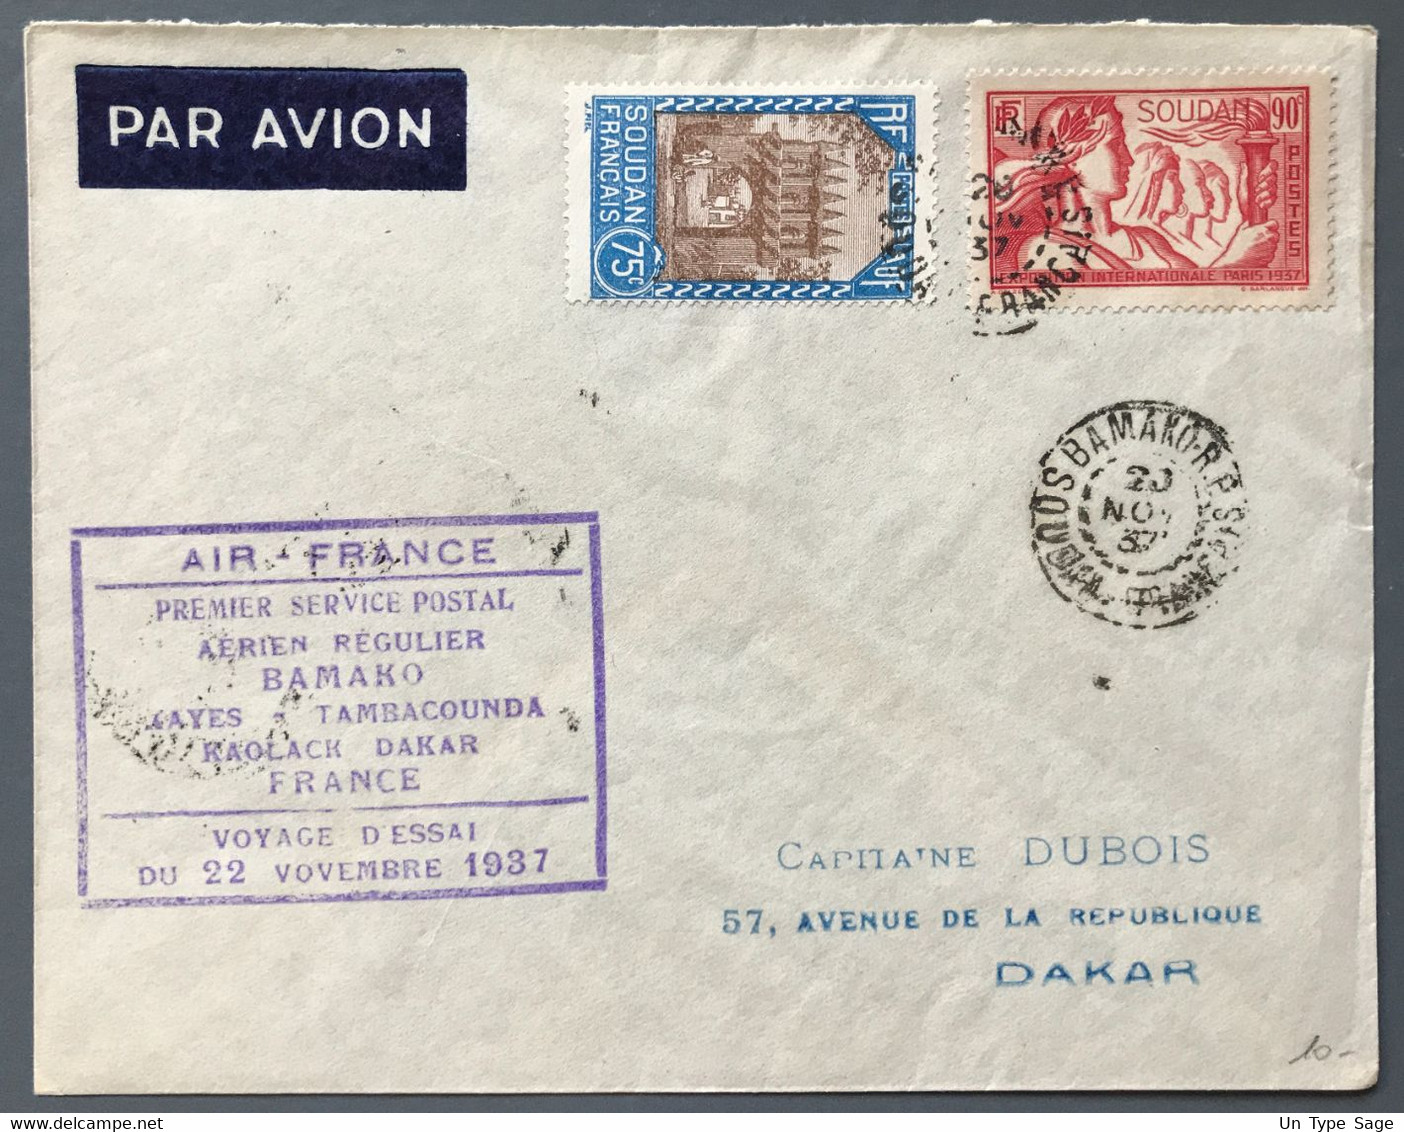 Soudan - Premier Service Postal Regulier Bamako-France - VOYAGE D'ESSAI 22.11.1937 - (A1360) - Briefe U. Dokumente